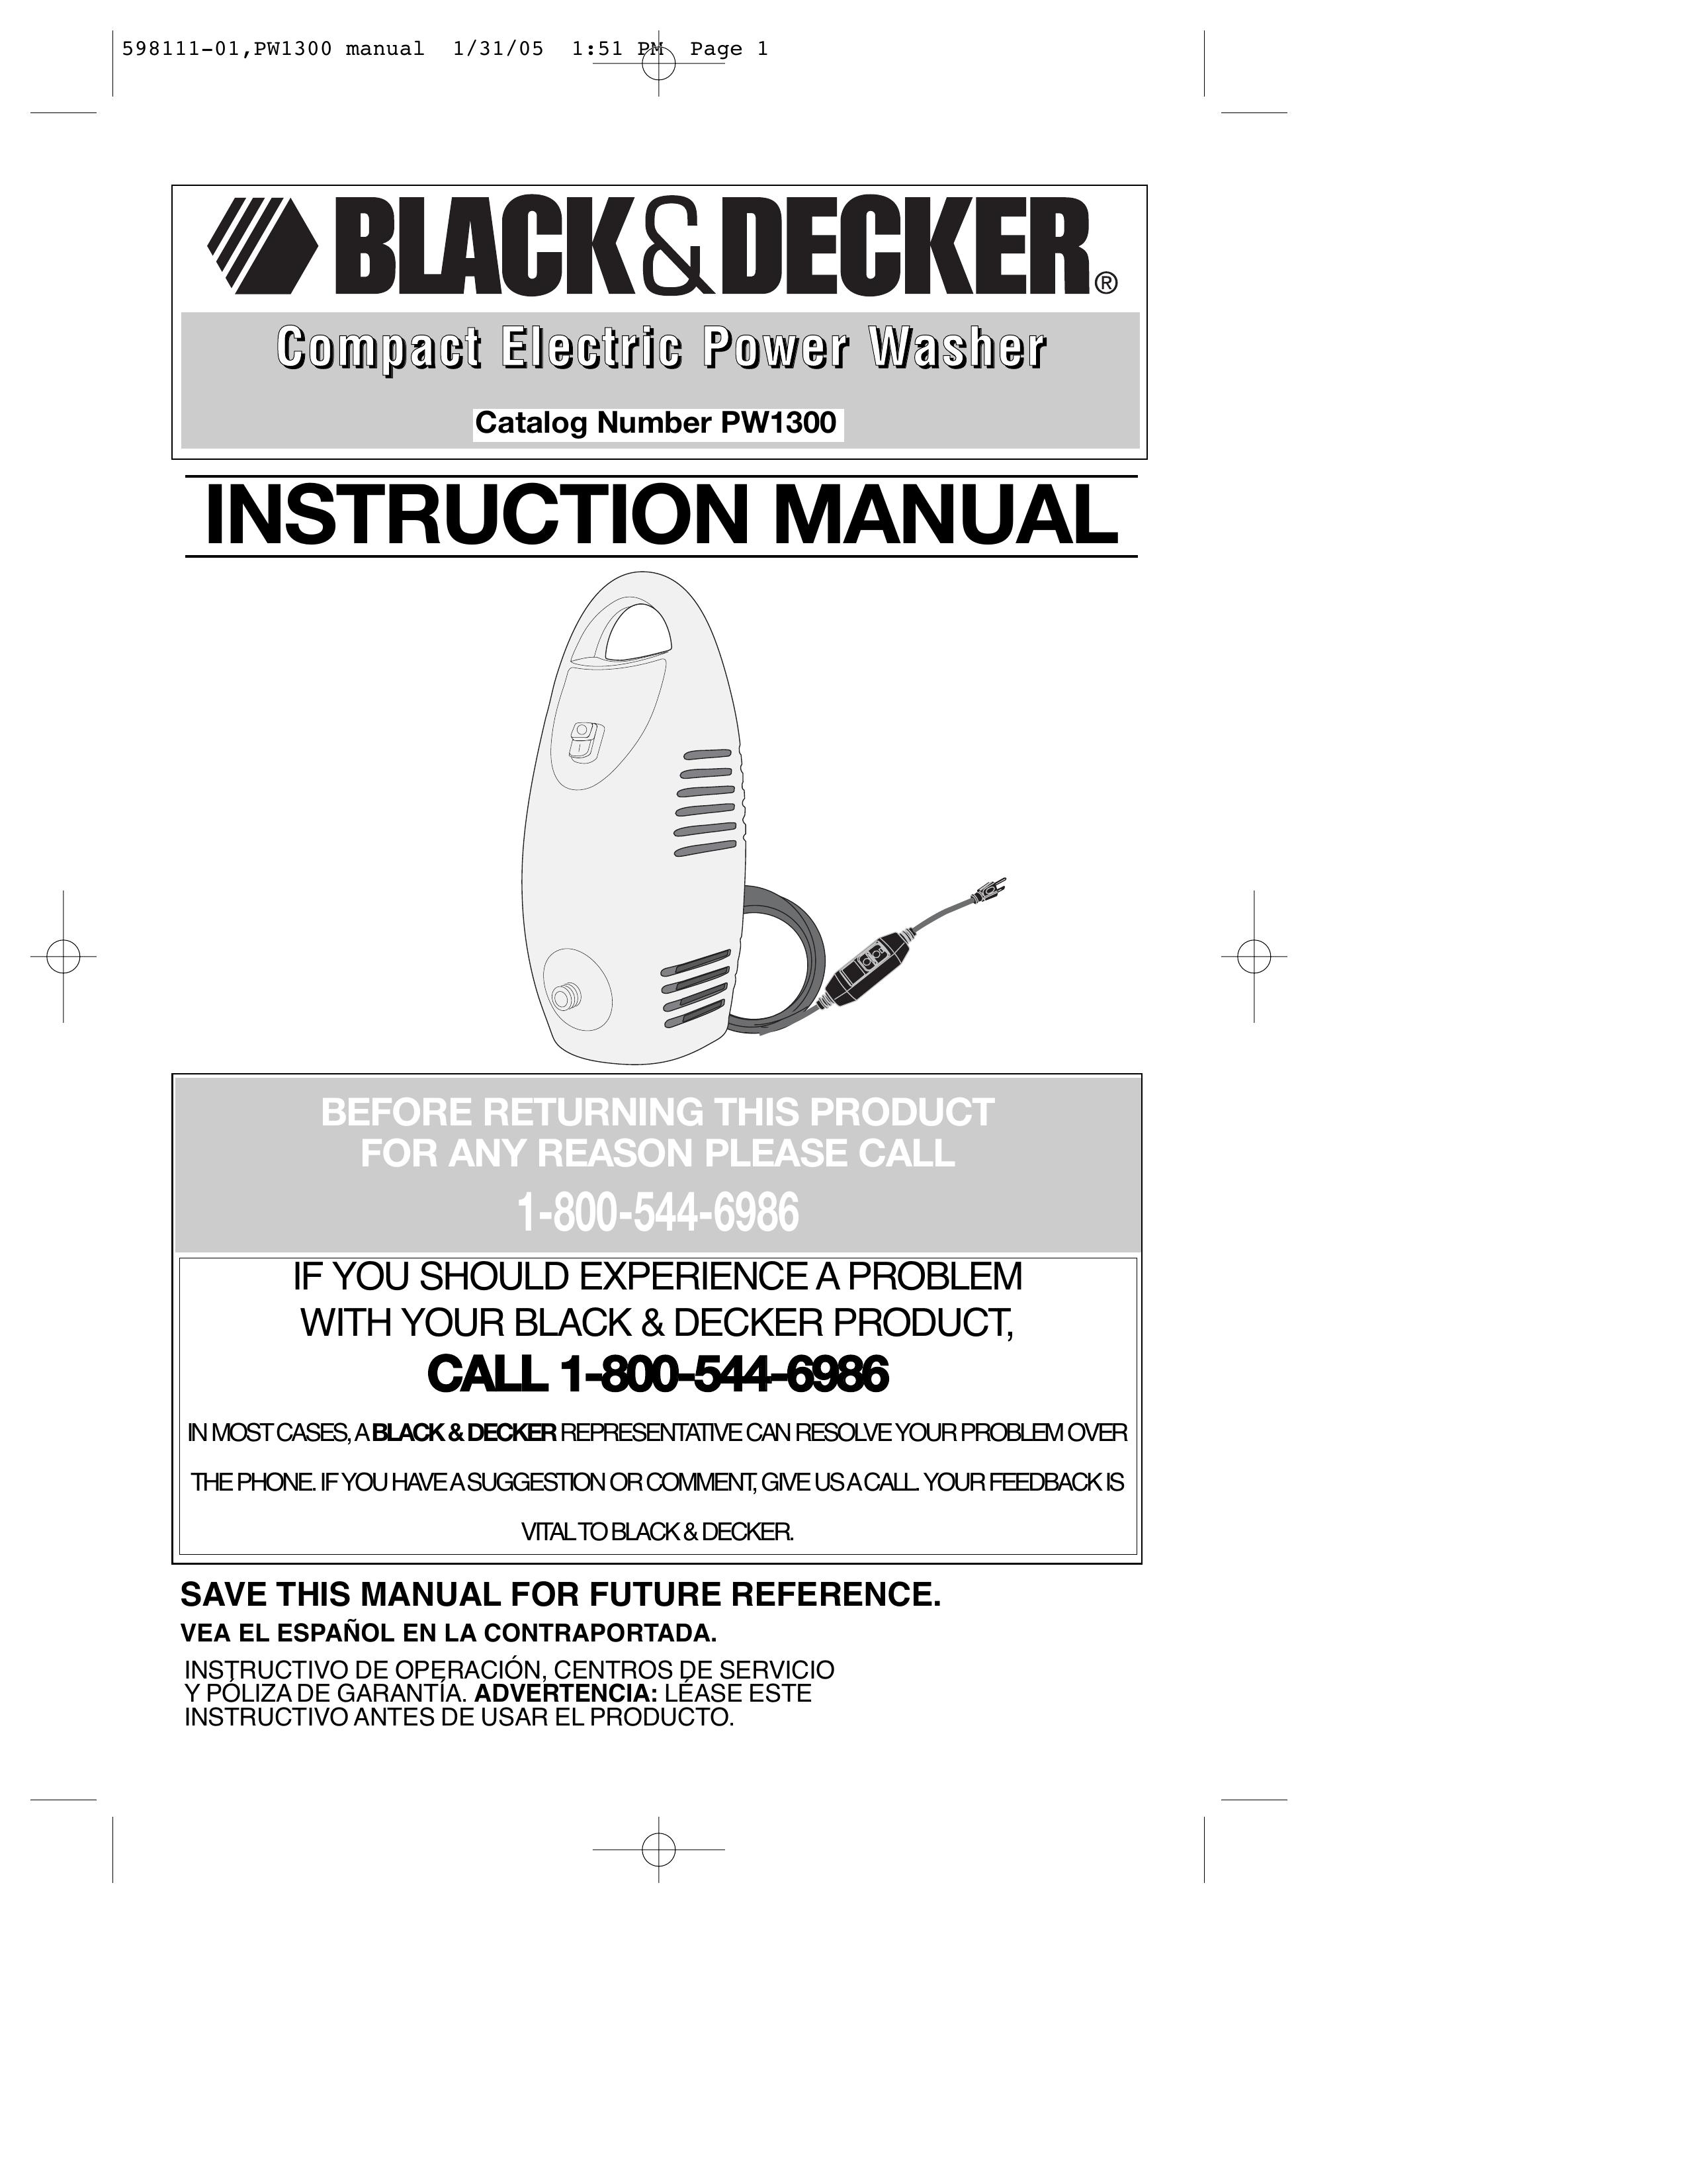 Black & Decker 598111-01 Pressure Washer User Manual